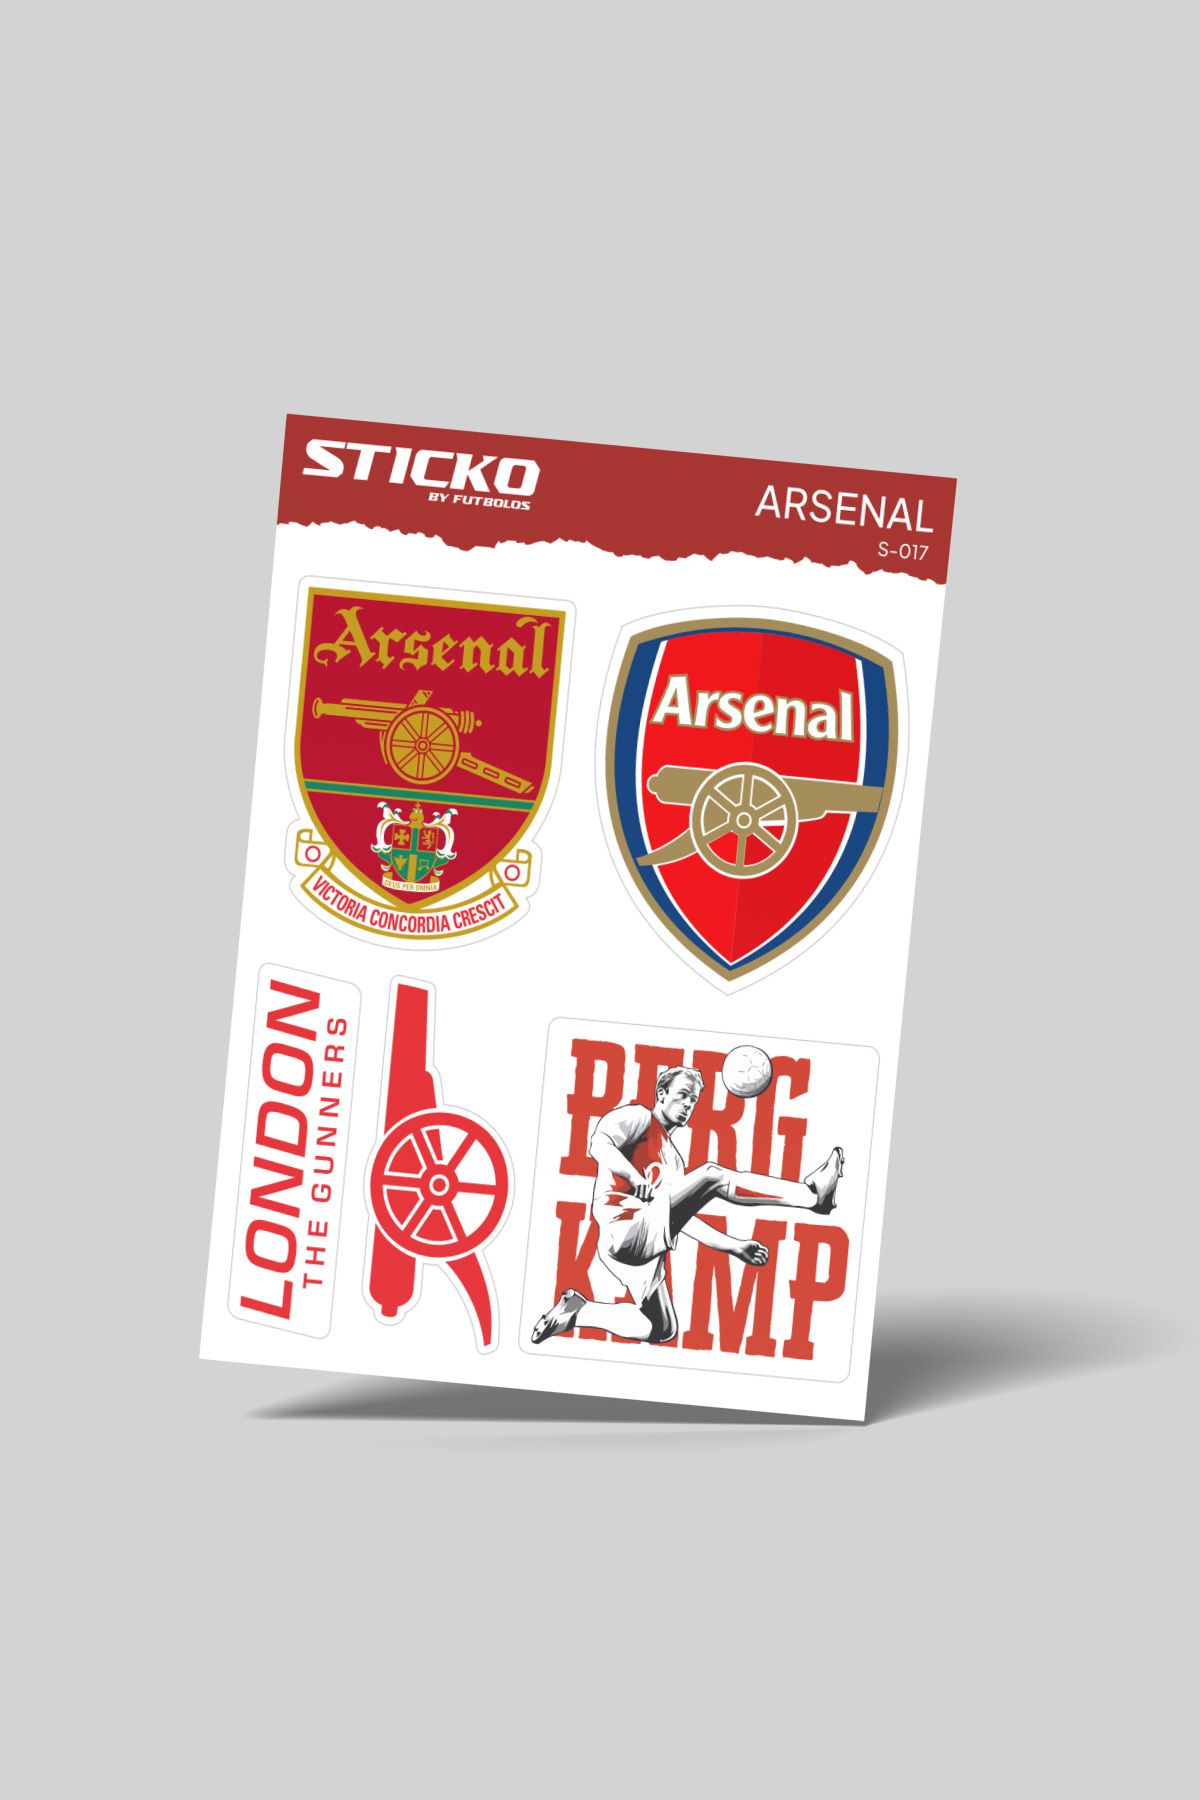 Futbolos Arsenal Sticker - London Gunners, Arsenal Logo, Bergkamp Etiket